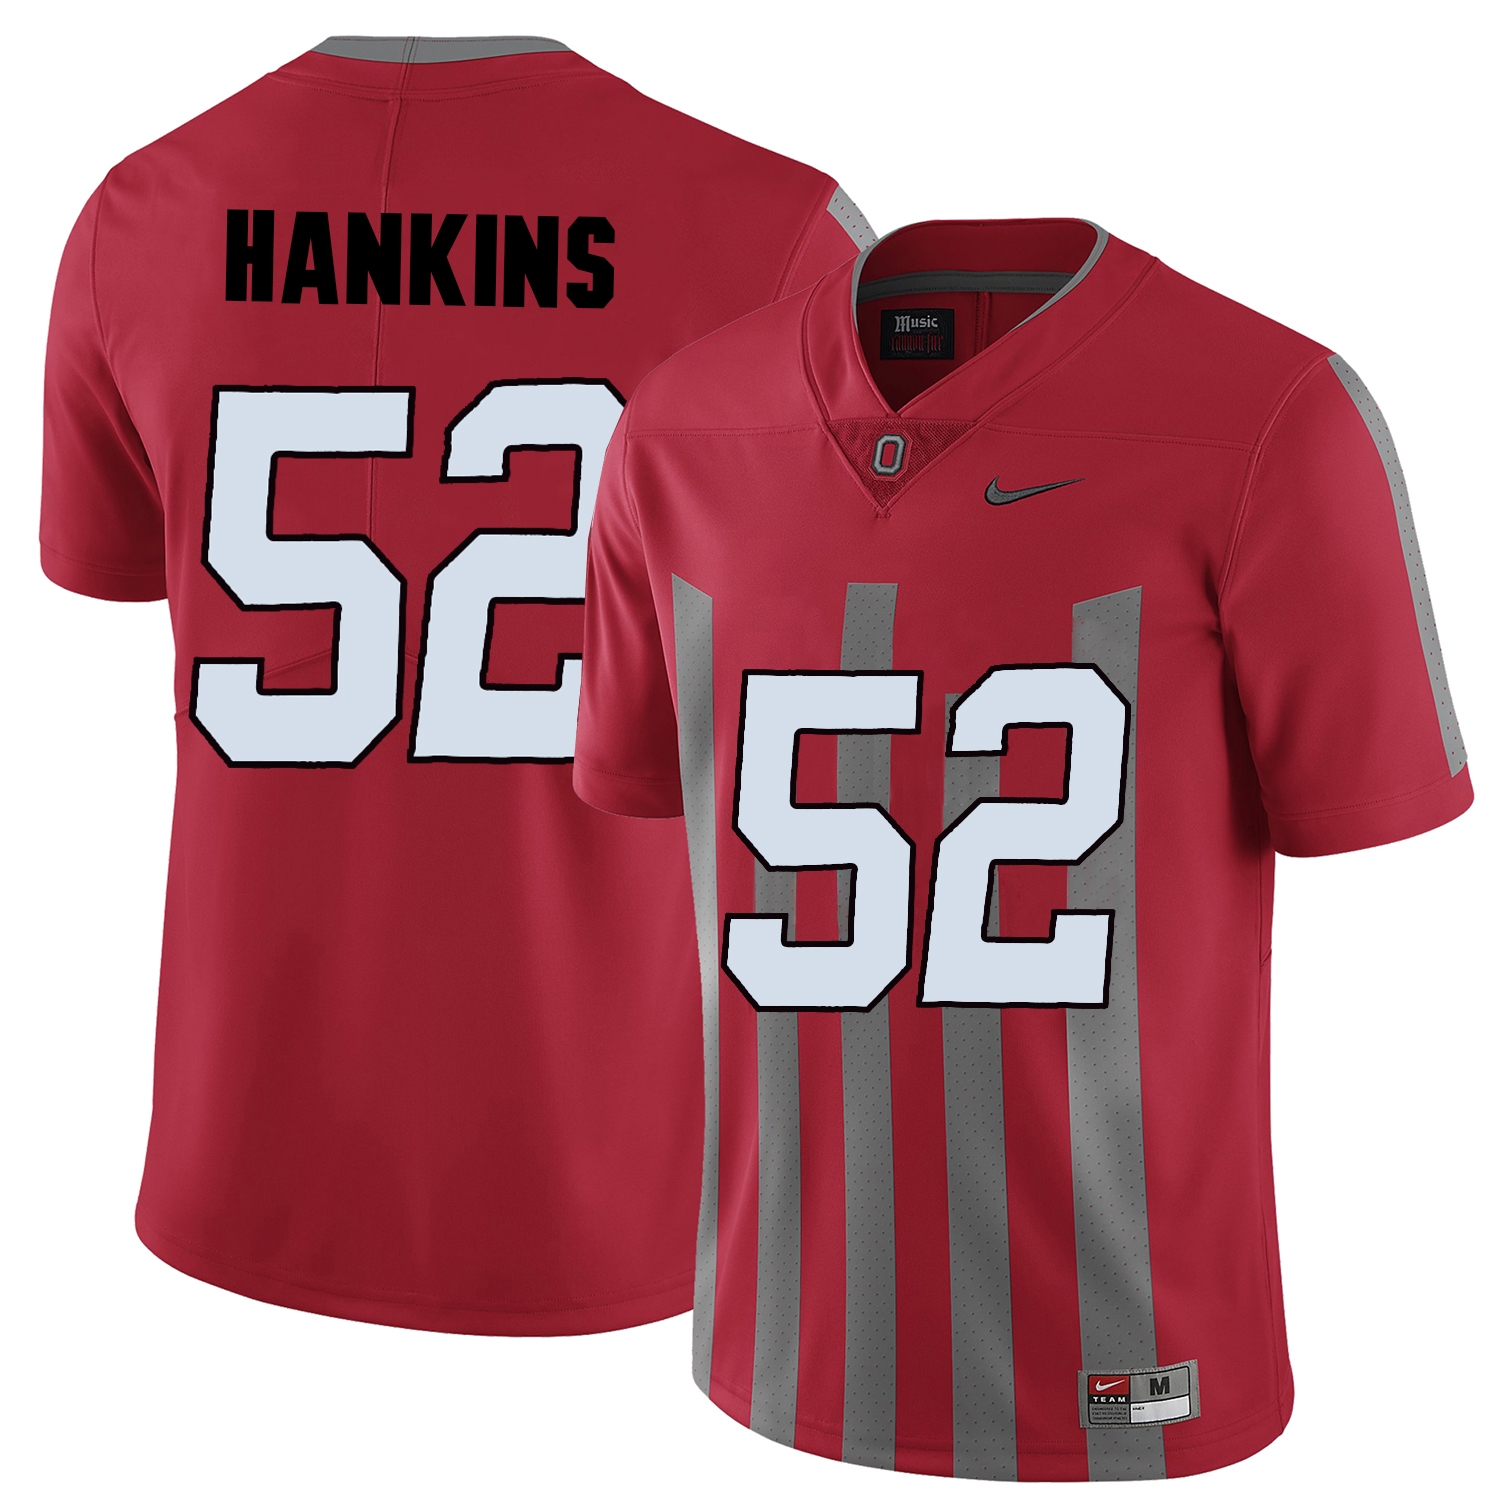 Ohio State Buckeyes Men's NCAA Johnathan Hankins #52 Red Elite College Football Jersey VGG8549GW